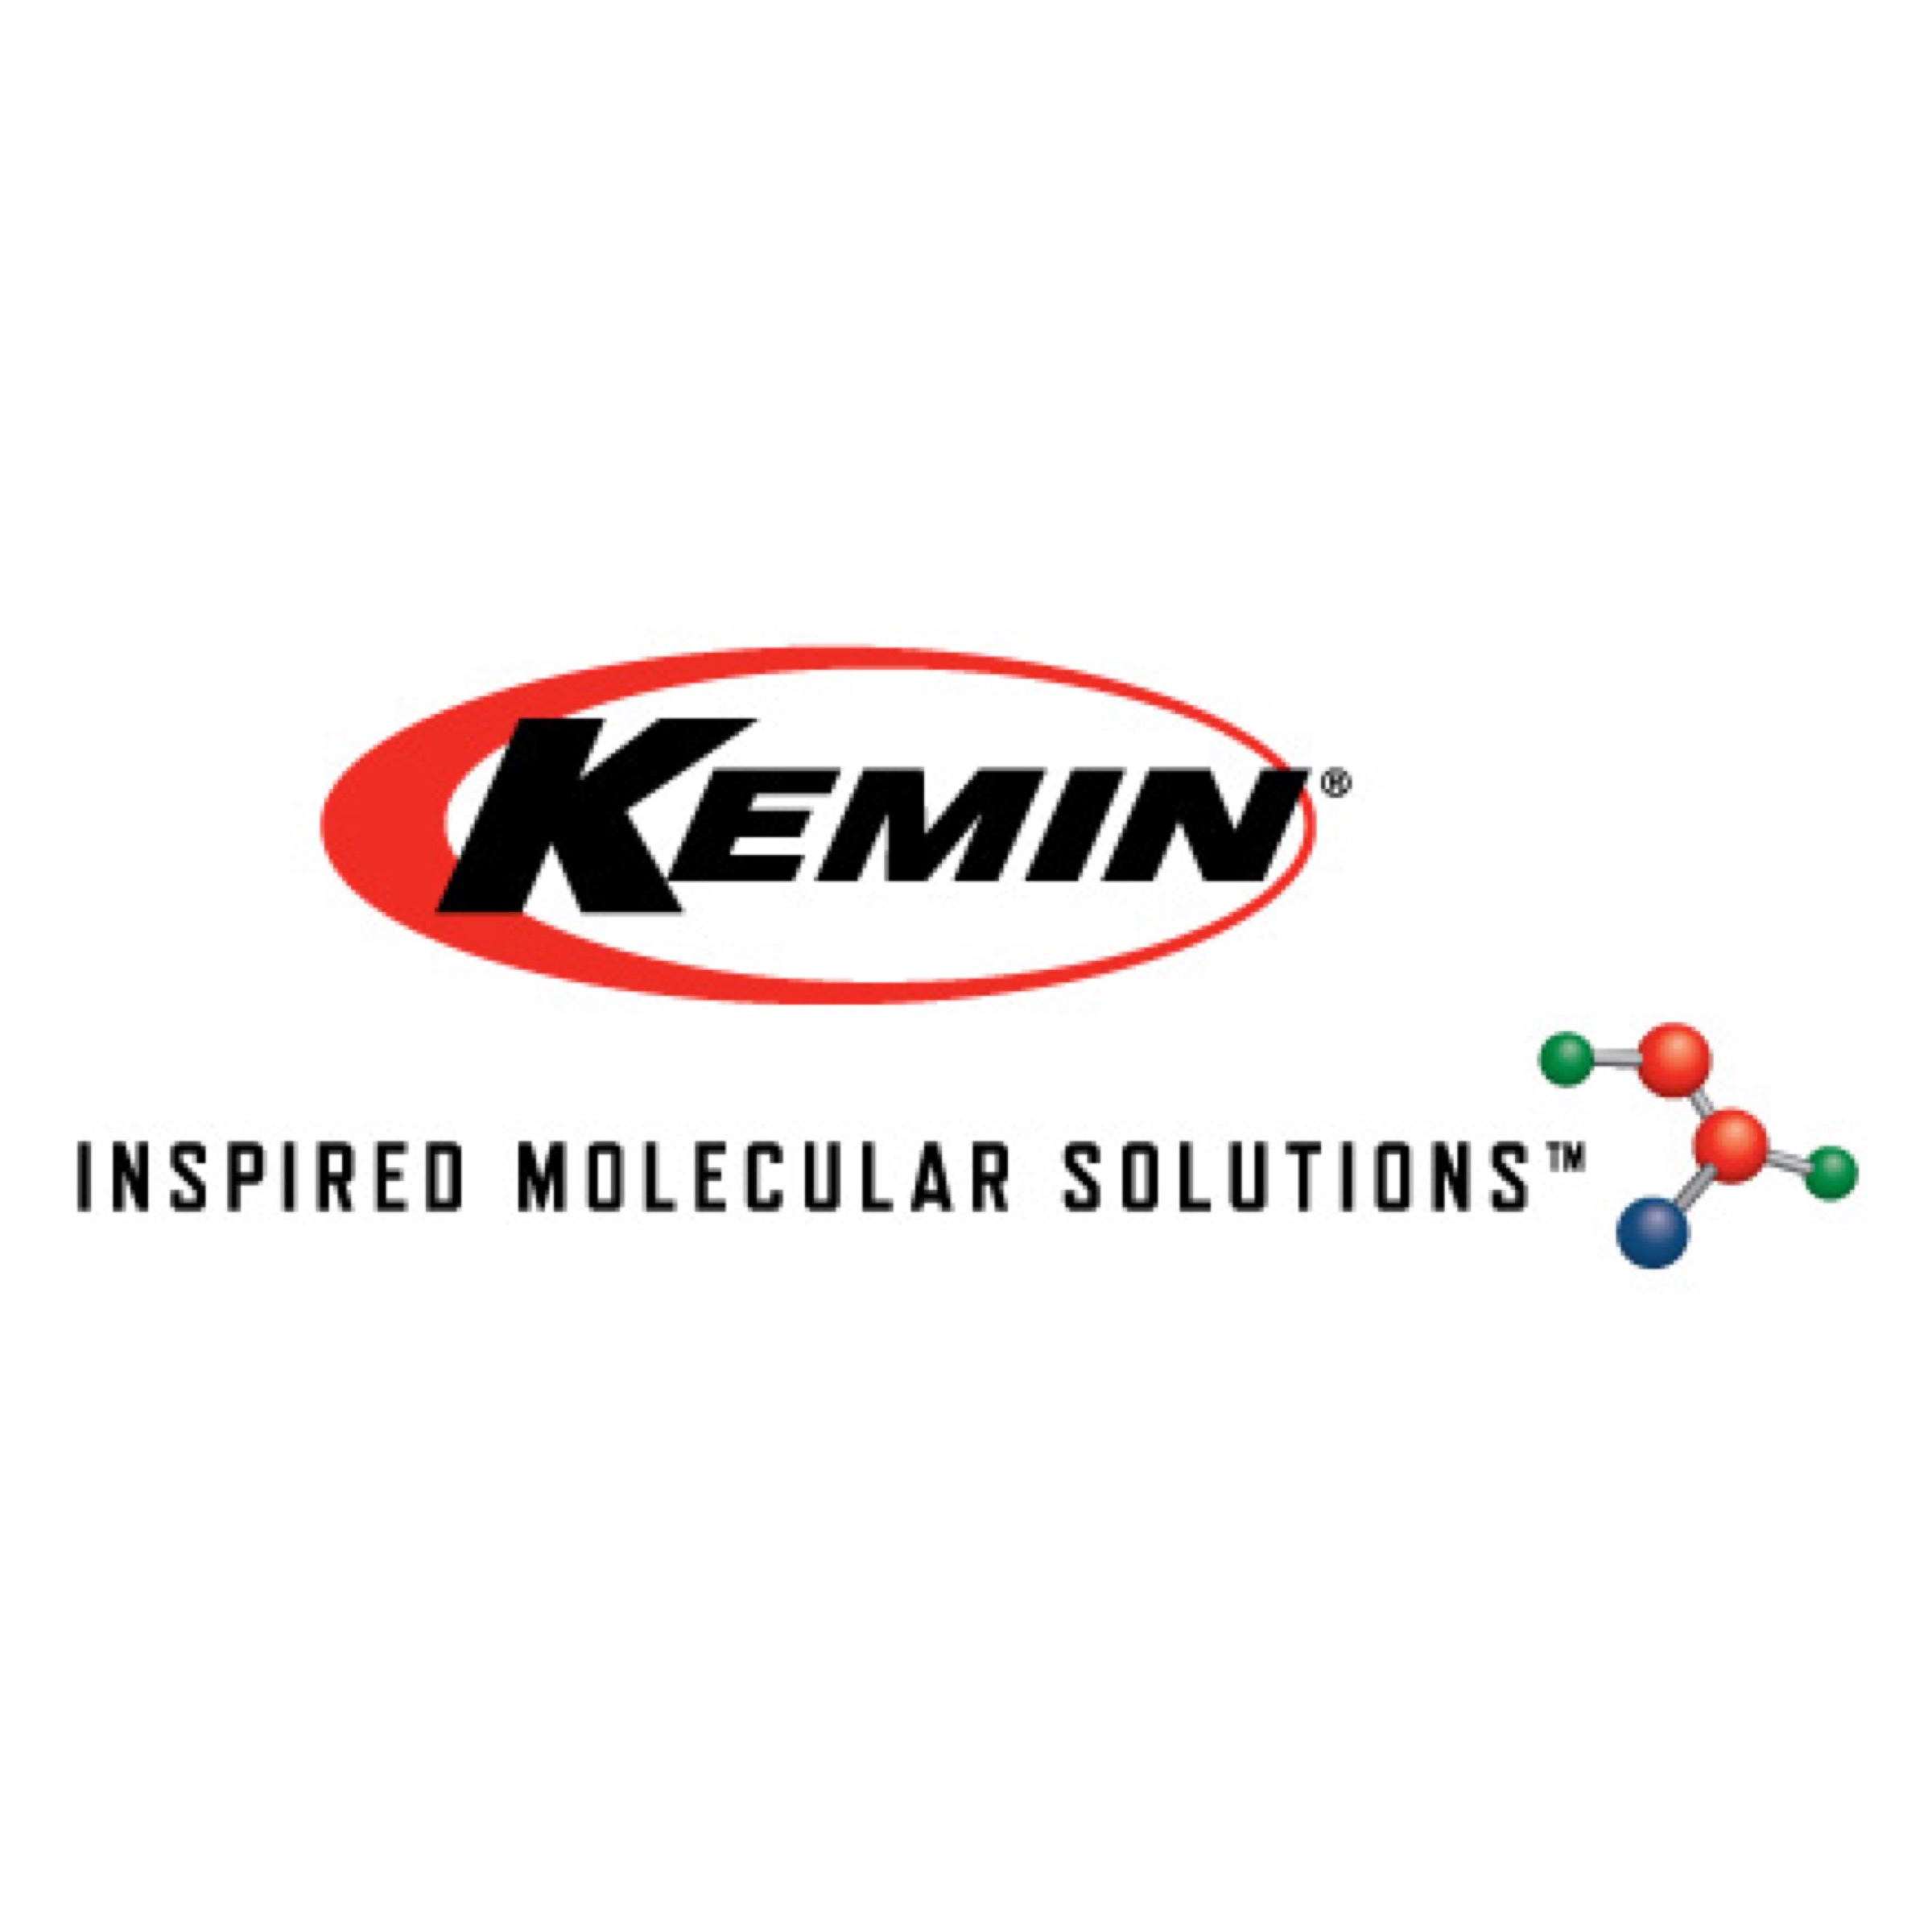 KEMIN logo